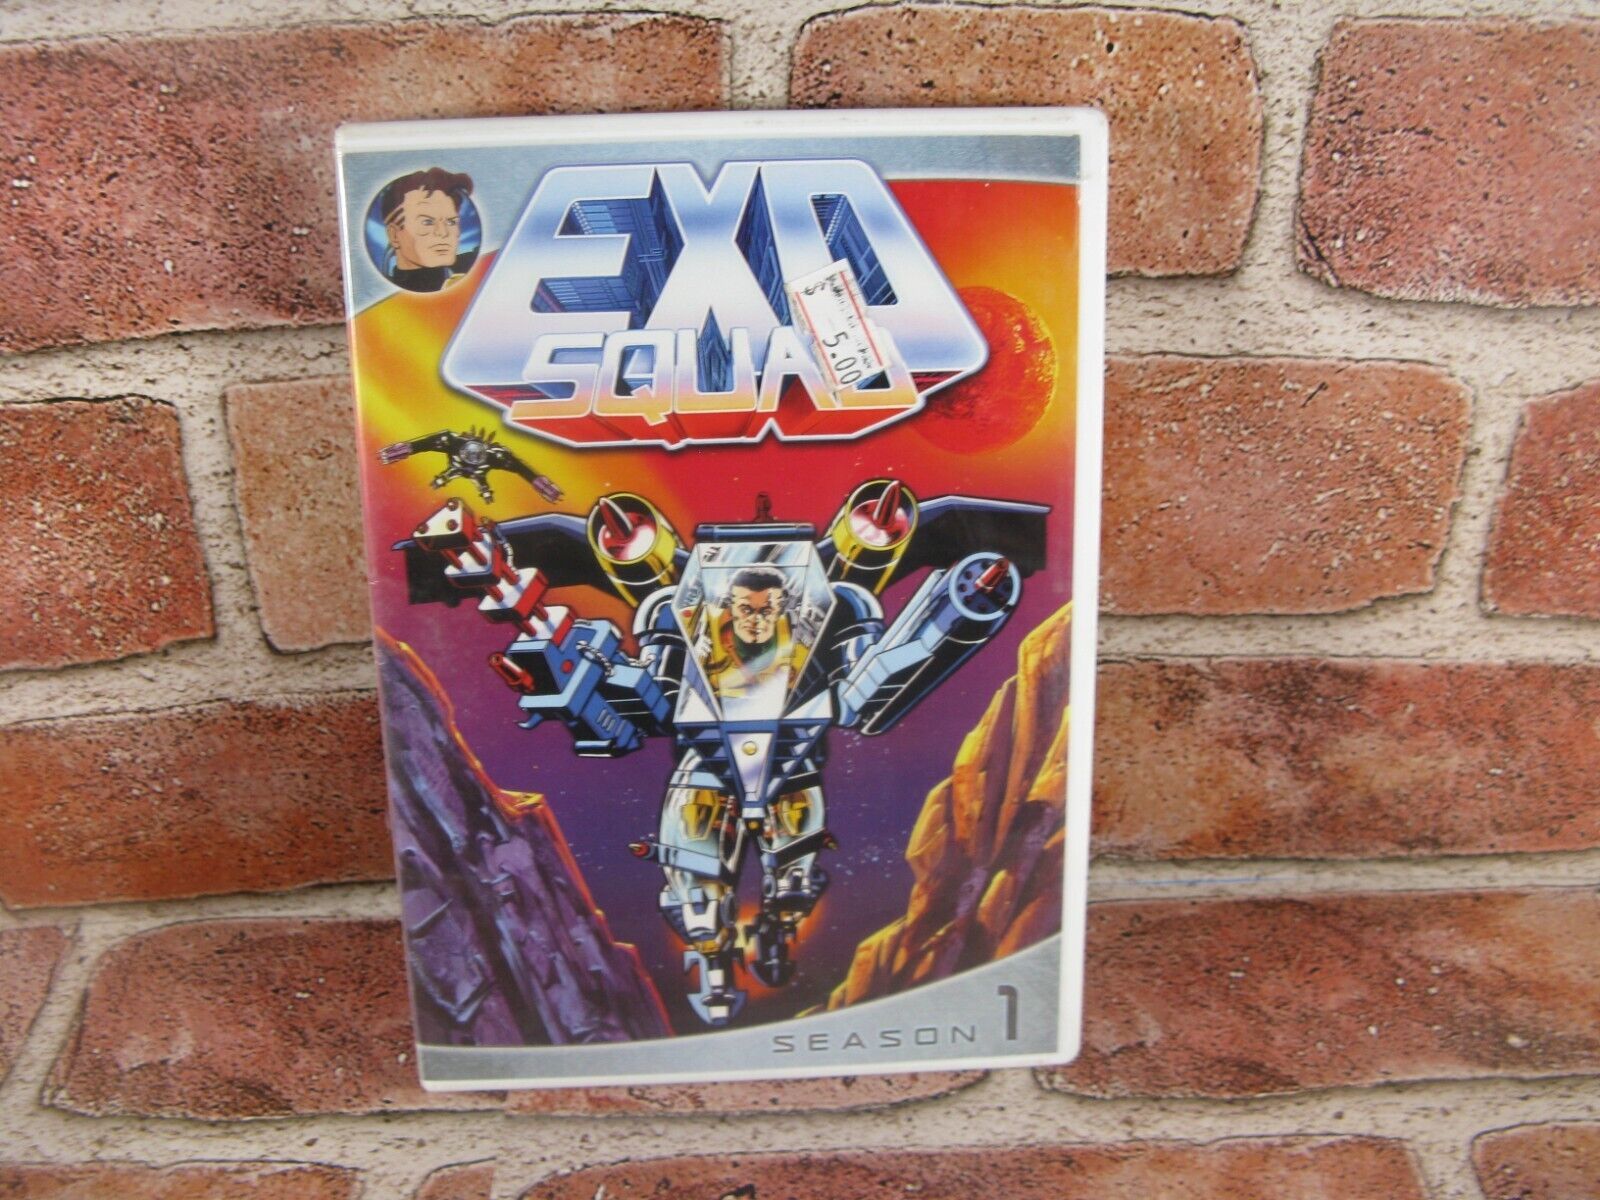 Exosquad Season 1 DVD 1993 Animated Space Opera - $5.89